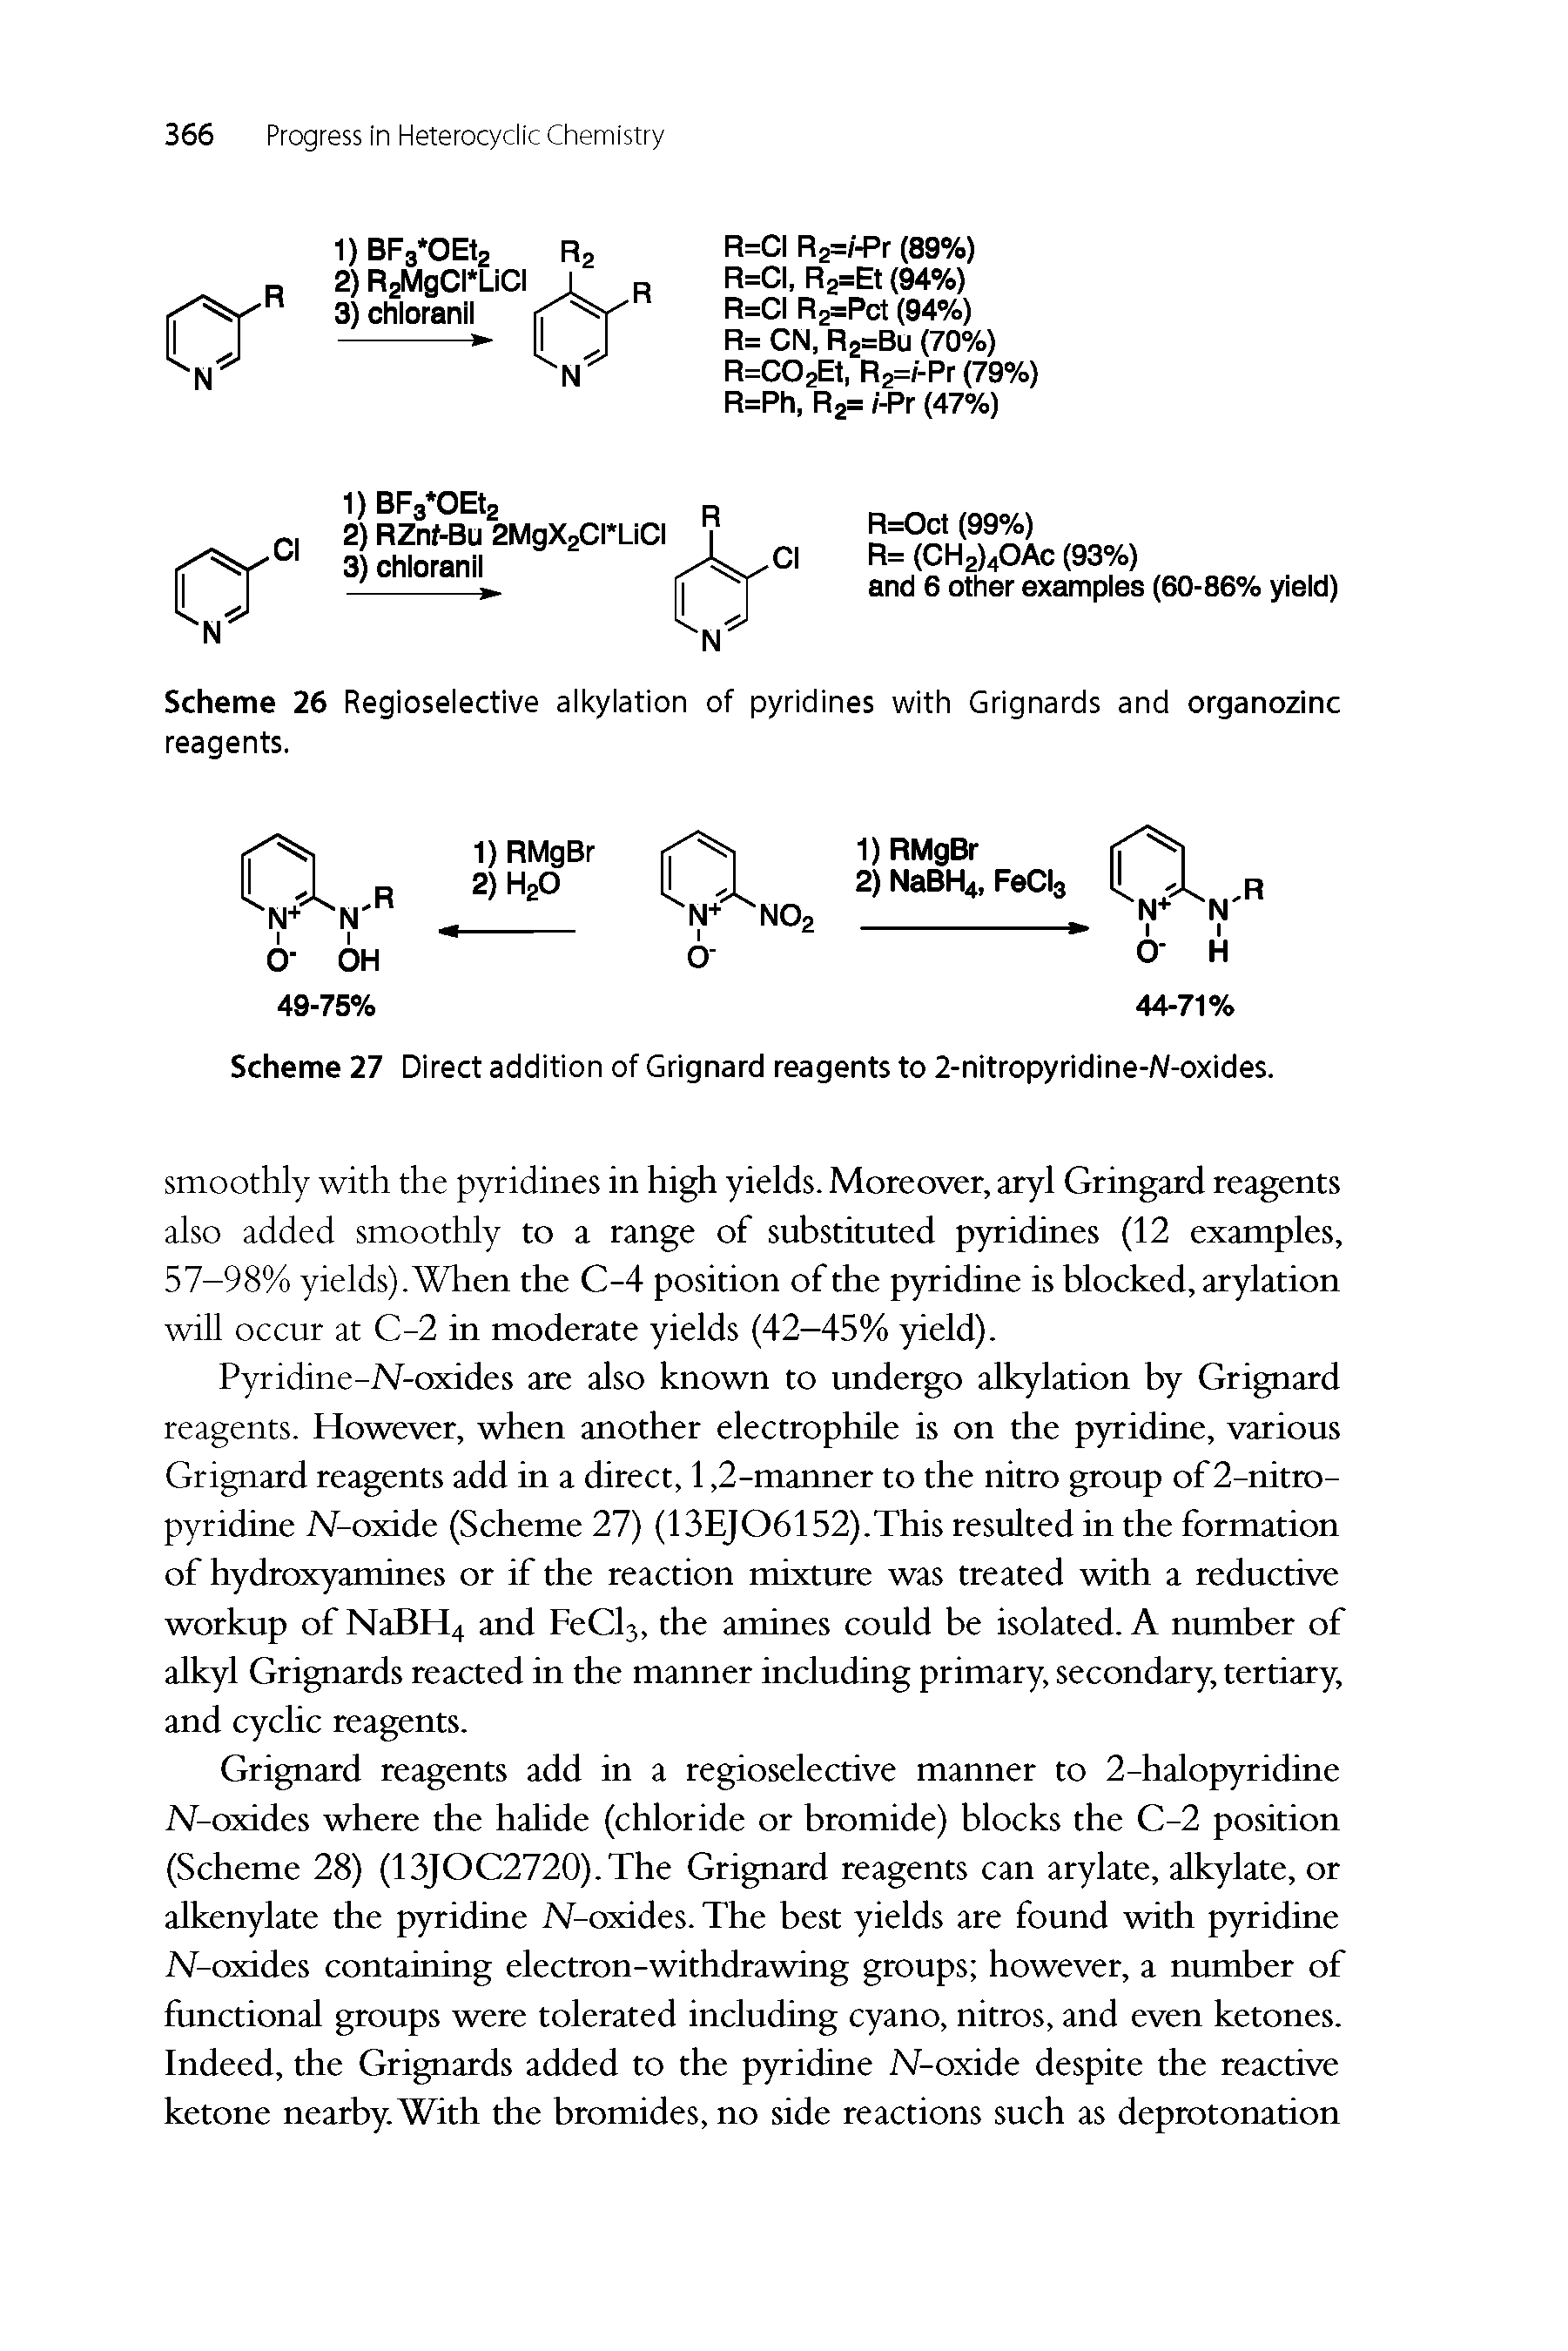 Scheme 26 Regioselective alkylation of pyridines with Grignards and organozinc reagents.